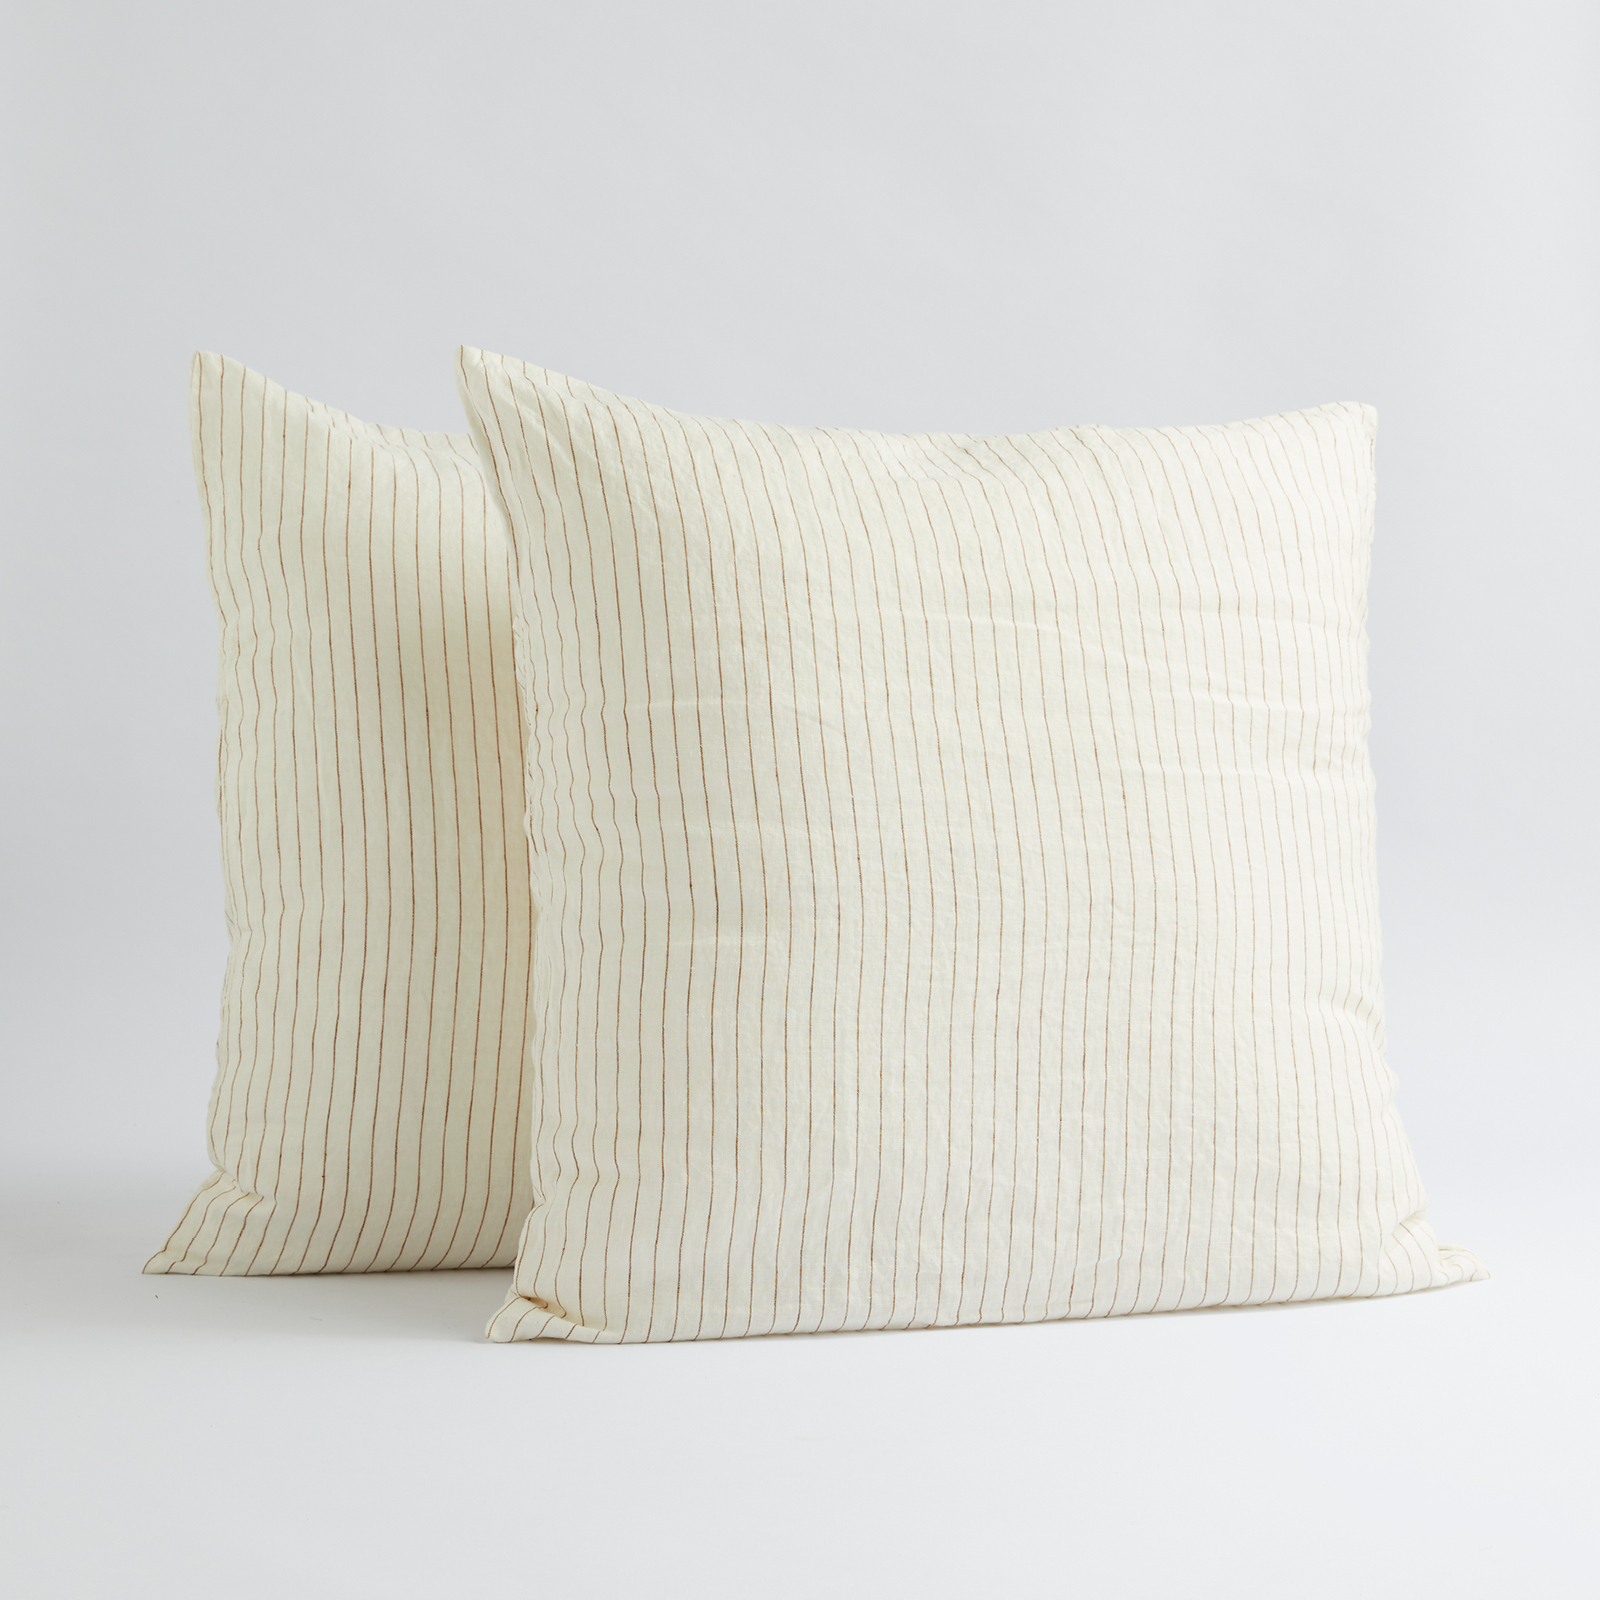 100% Pure Linen European Pillowcase Set in Cocoa Stripe (2)